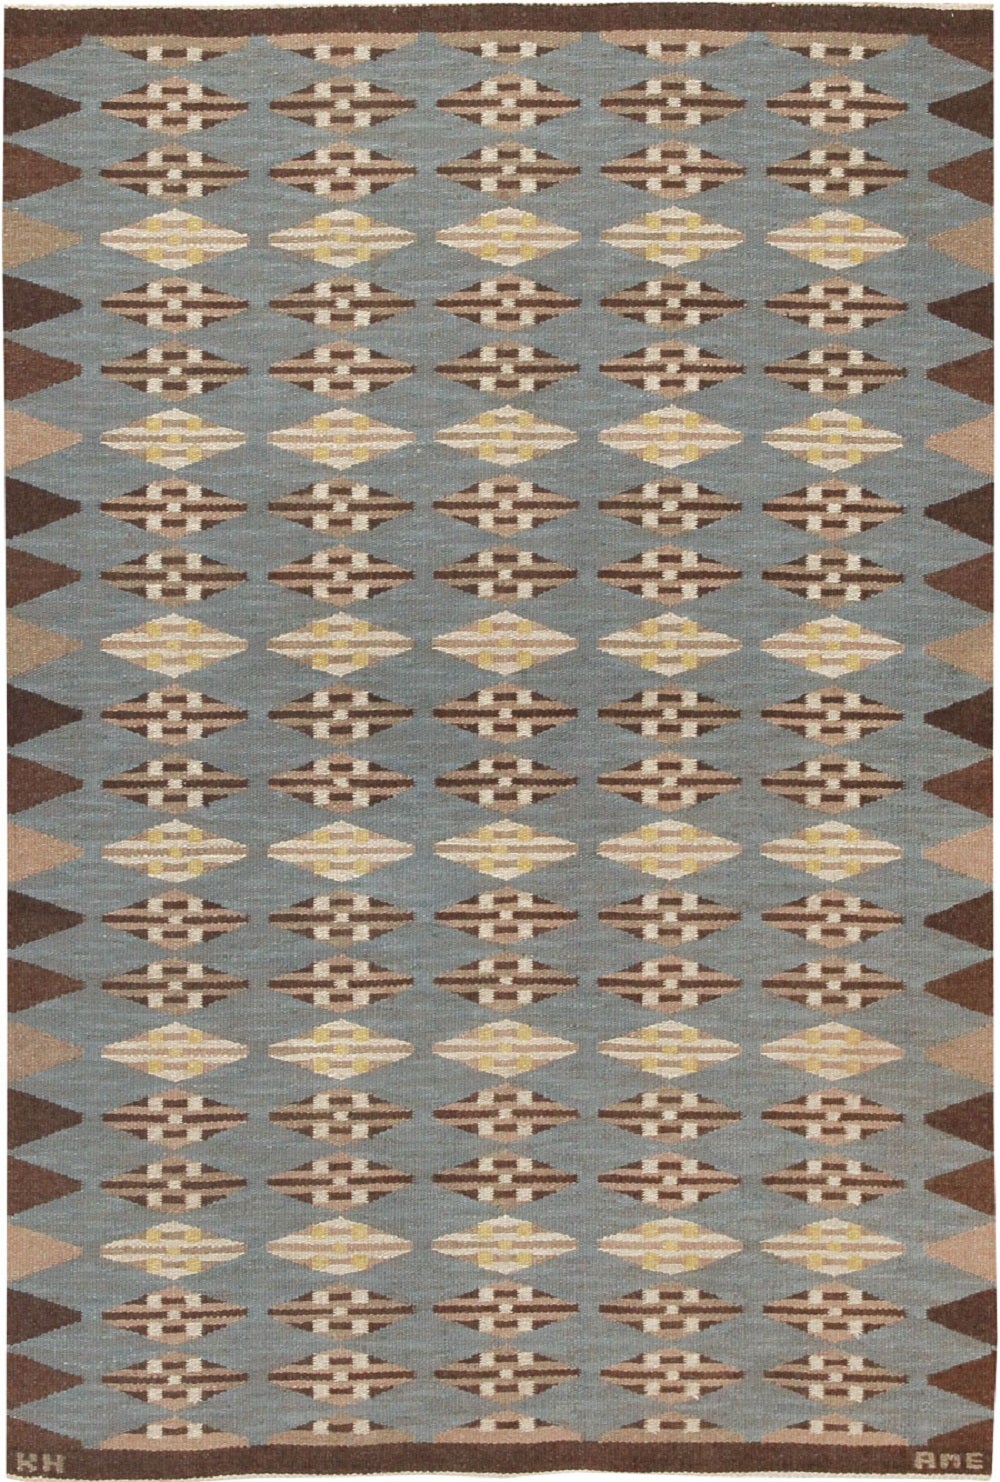 Midcentury Klockaregardens Hemslojd Scandinavian / Swedish Vintage Carpet 